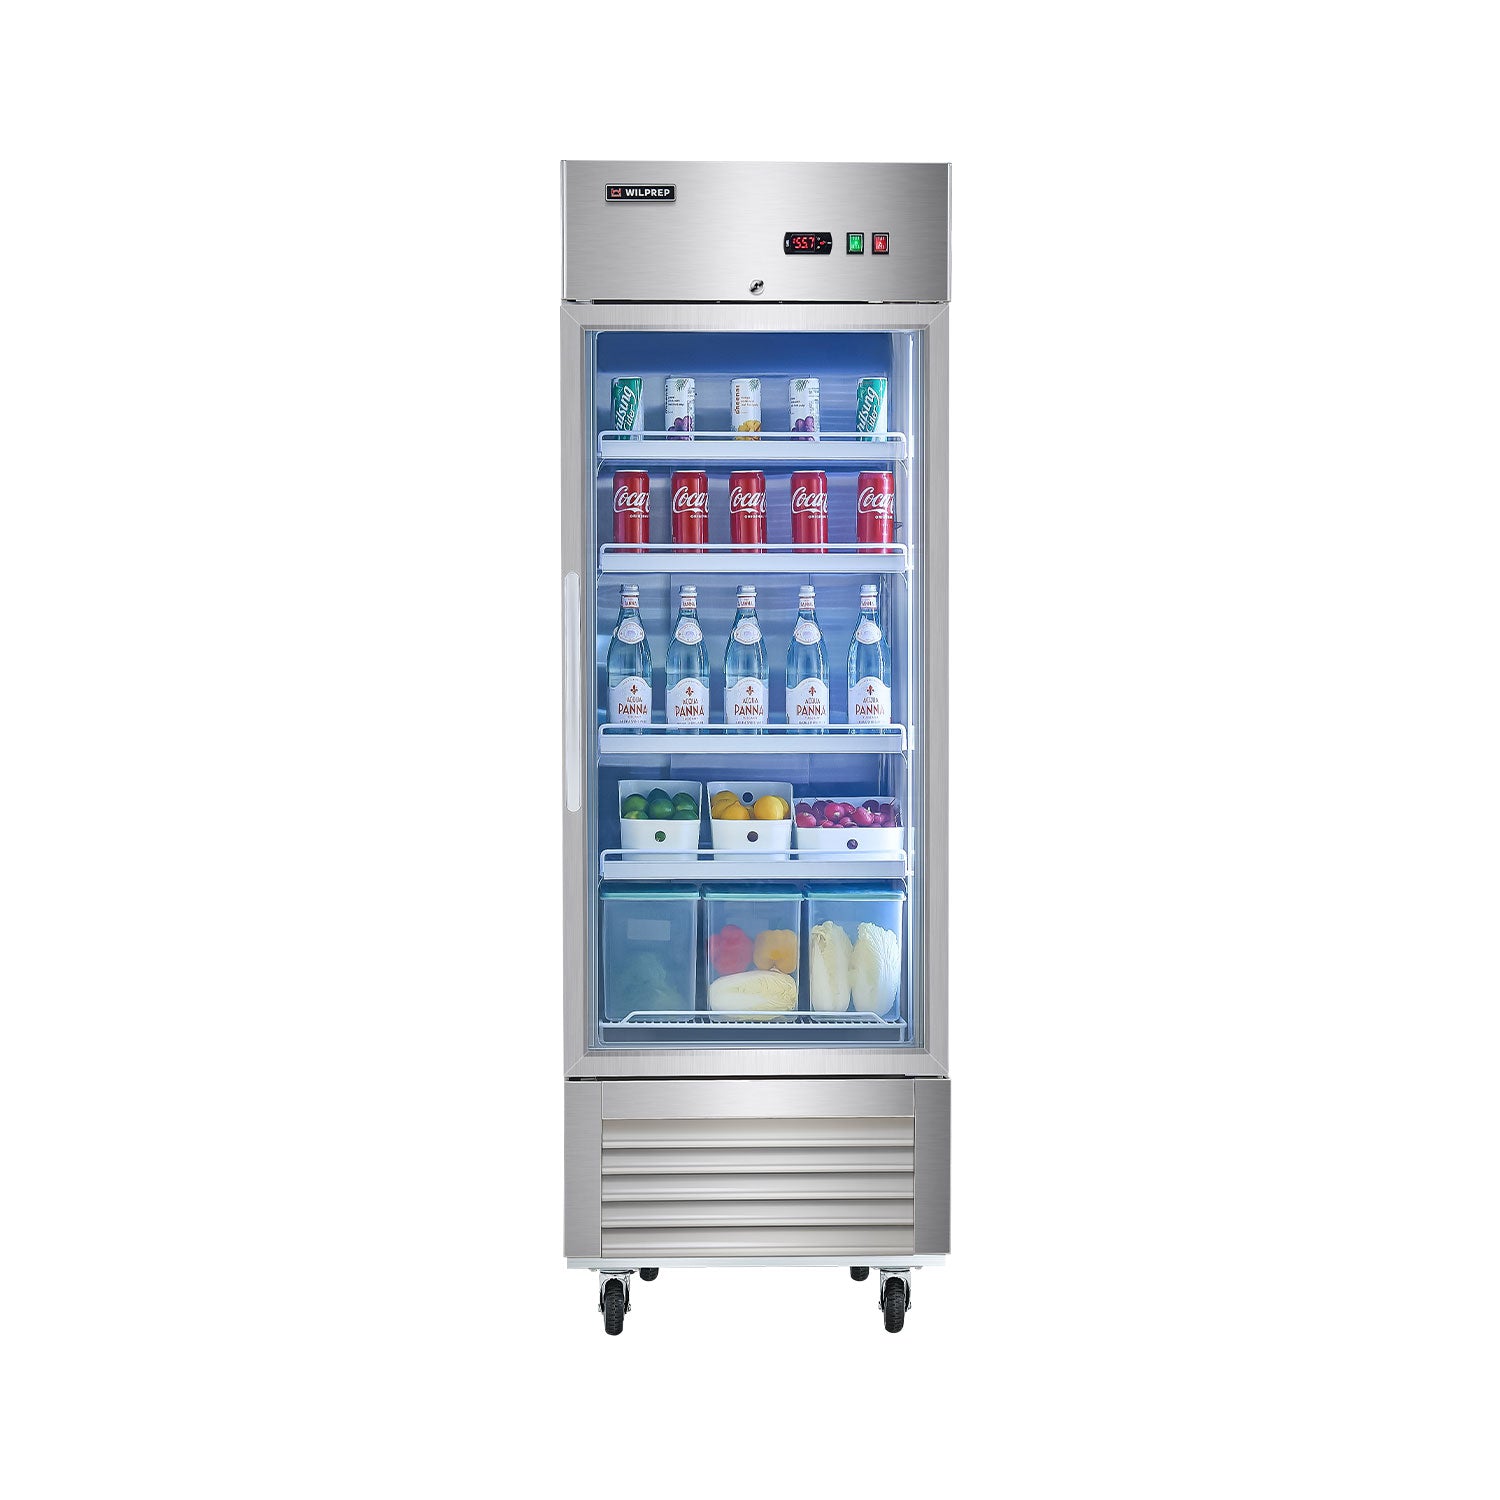 Wilprep 27-inch Single Glass Door Refrigerator